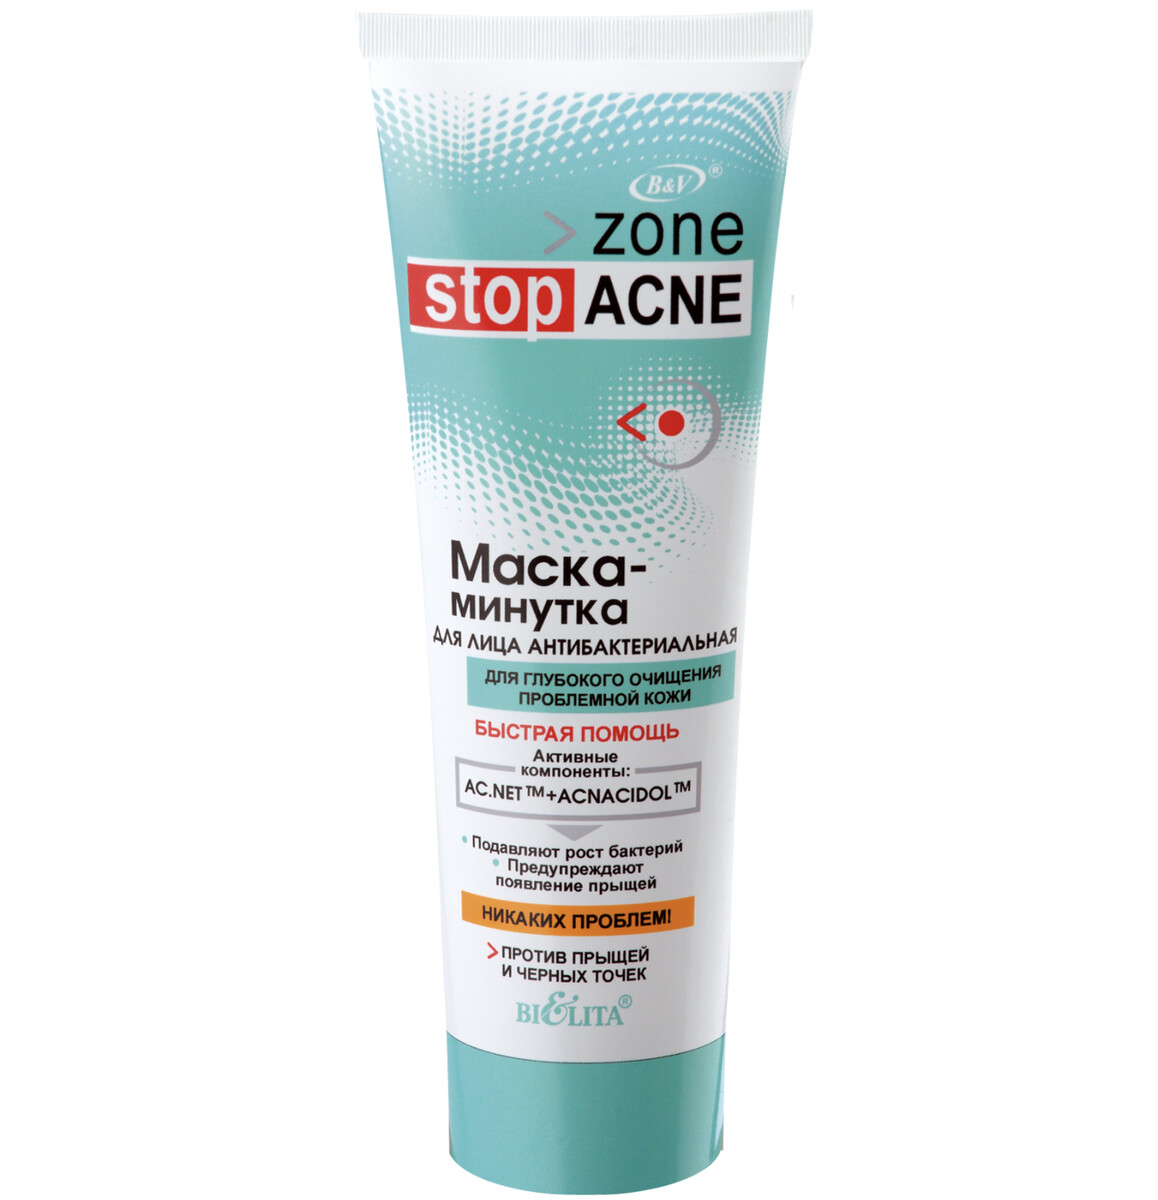 Stop acne маска-минутка для лица антибактериальная 75 мл stop acne маска минутка для лица антибактериальная 75 мл